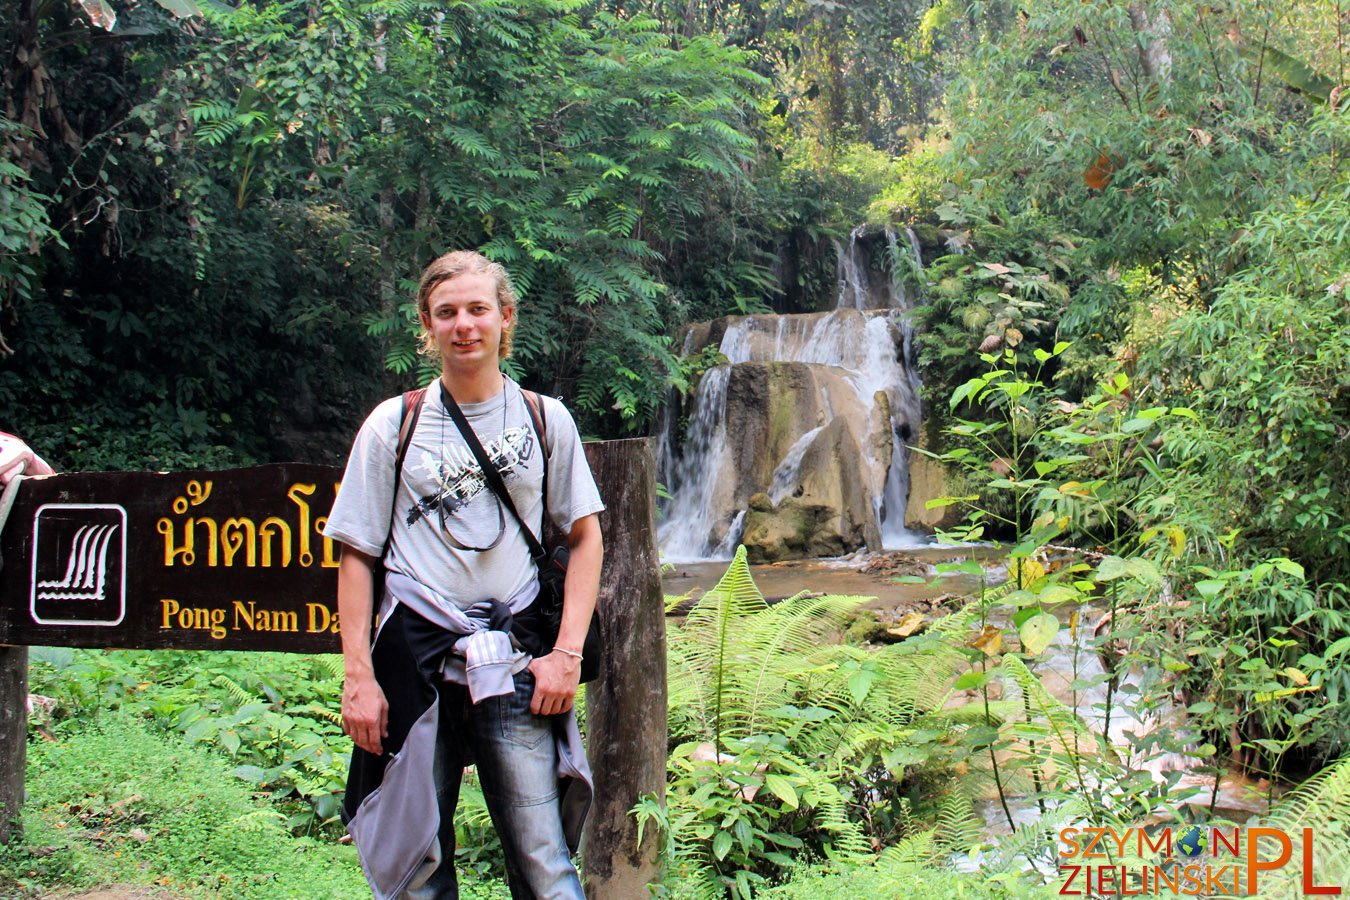 Doi Phahompok National Park, Chiang Mai province, Thailand